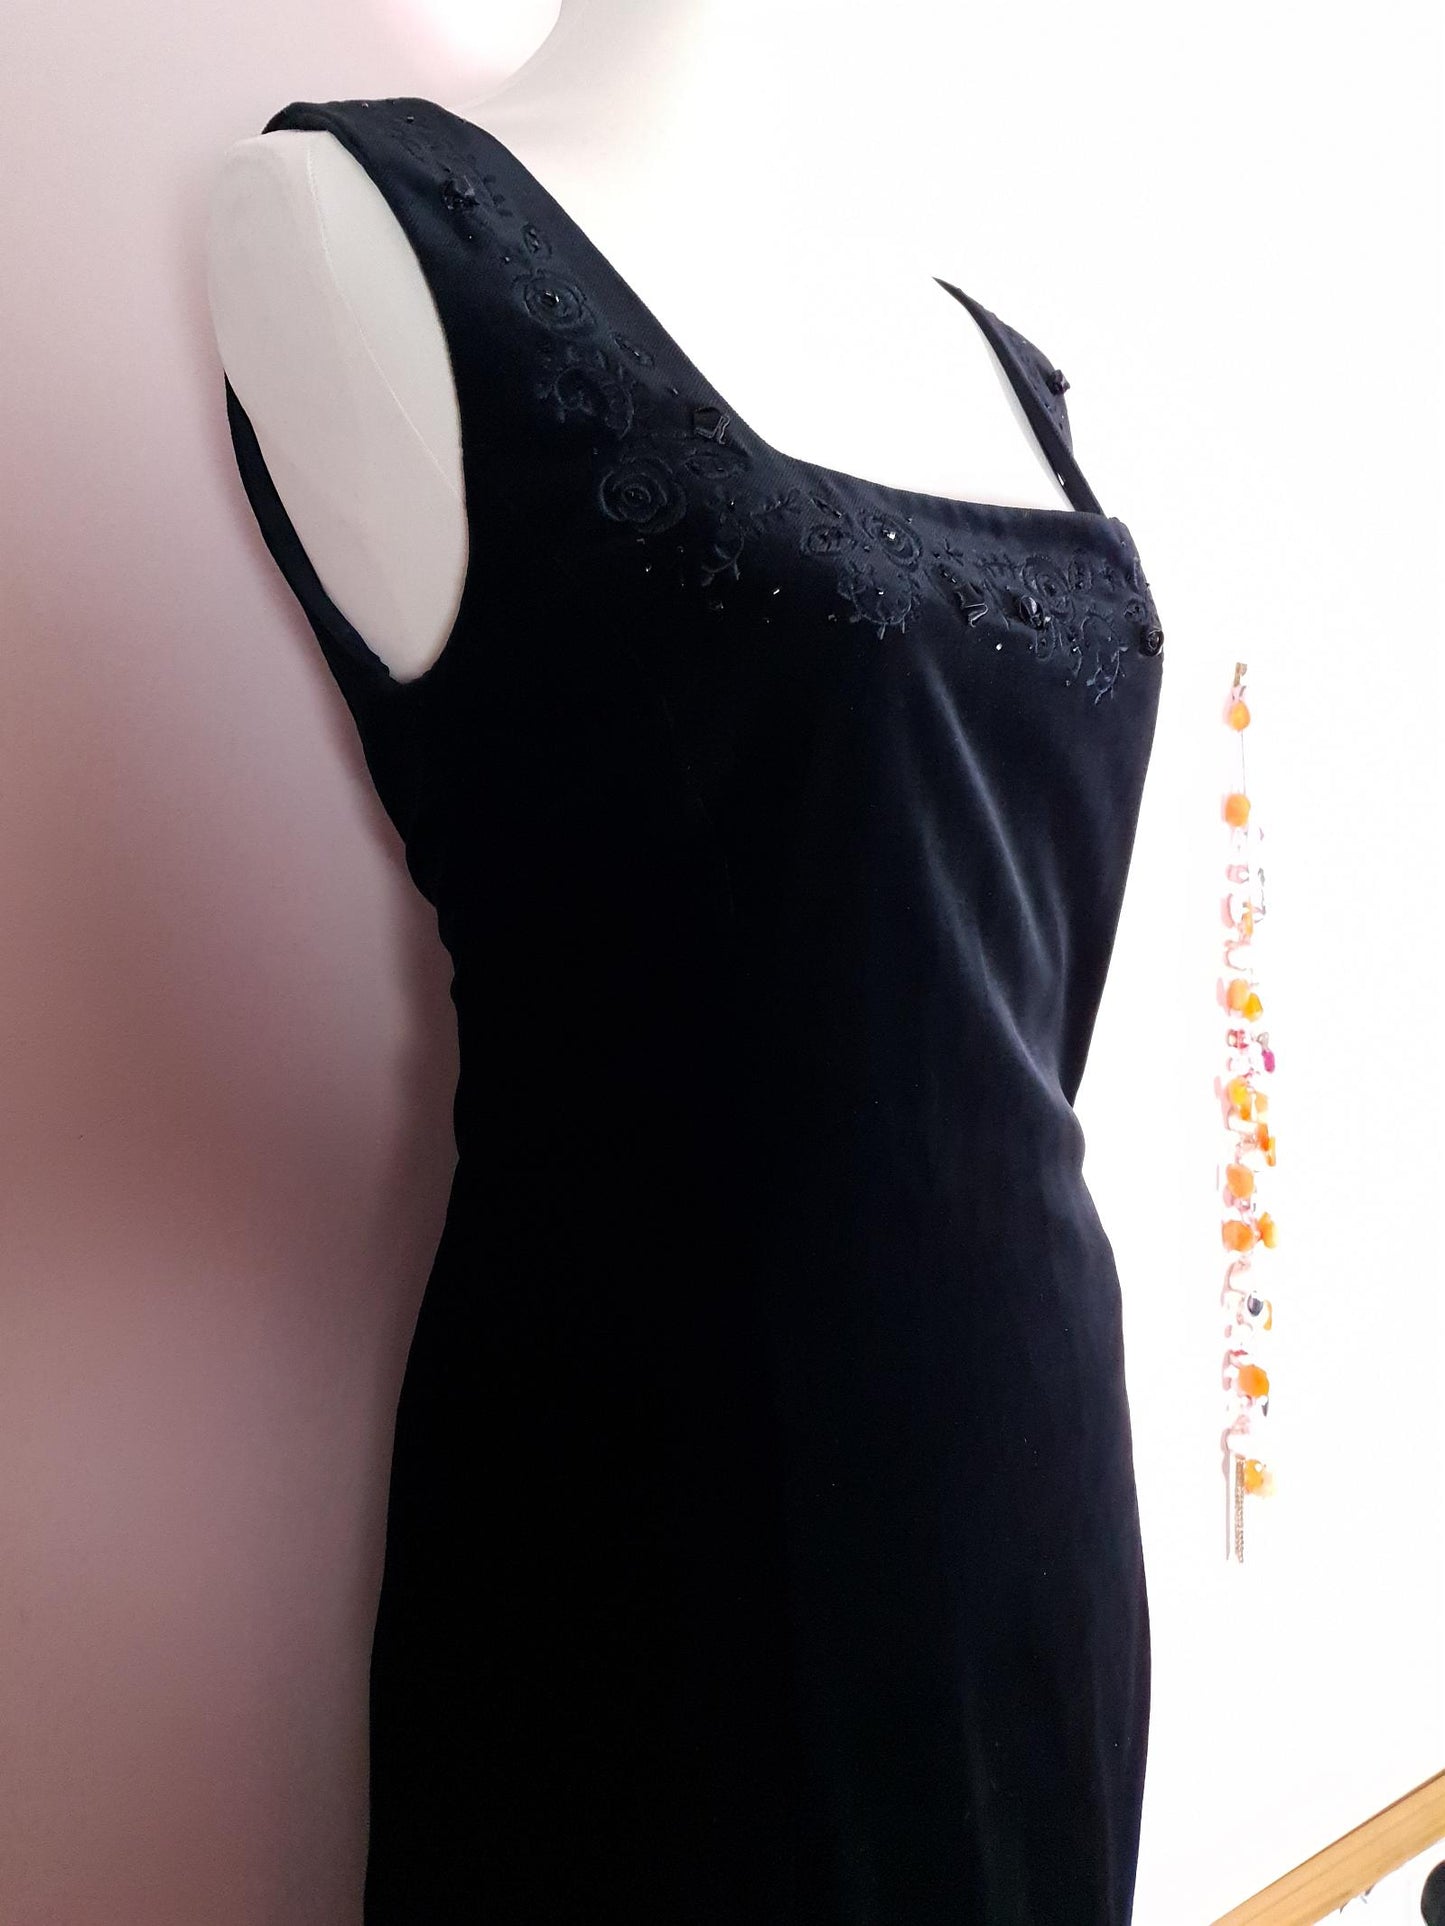 English Classics - 1990s Vintage Laura Ashley Black Velvet Embroidered Dress - Size 12/14